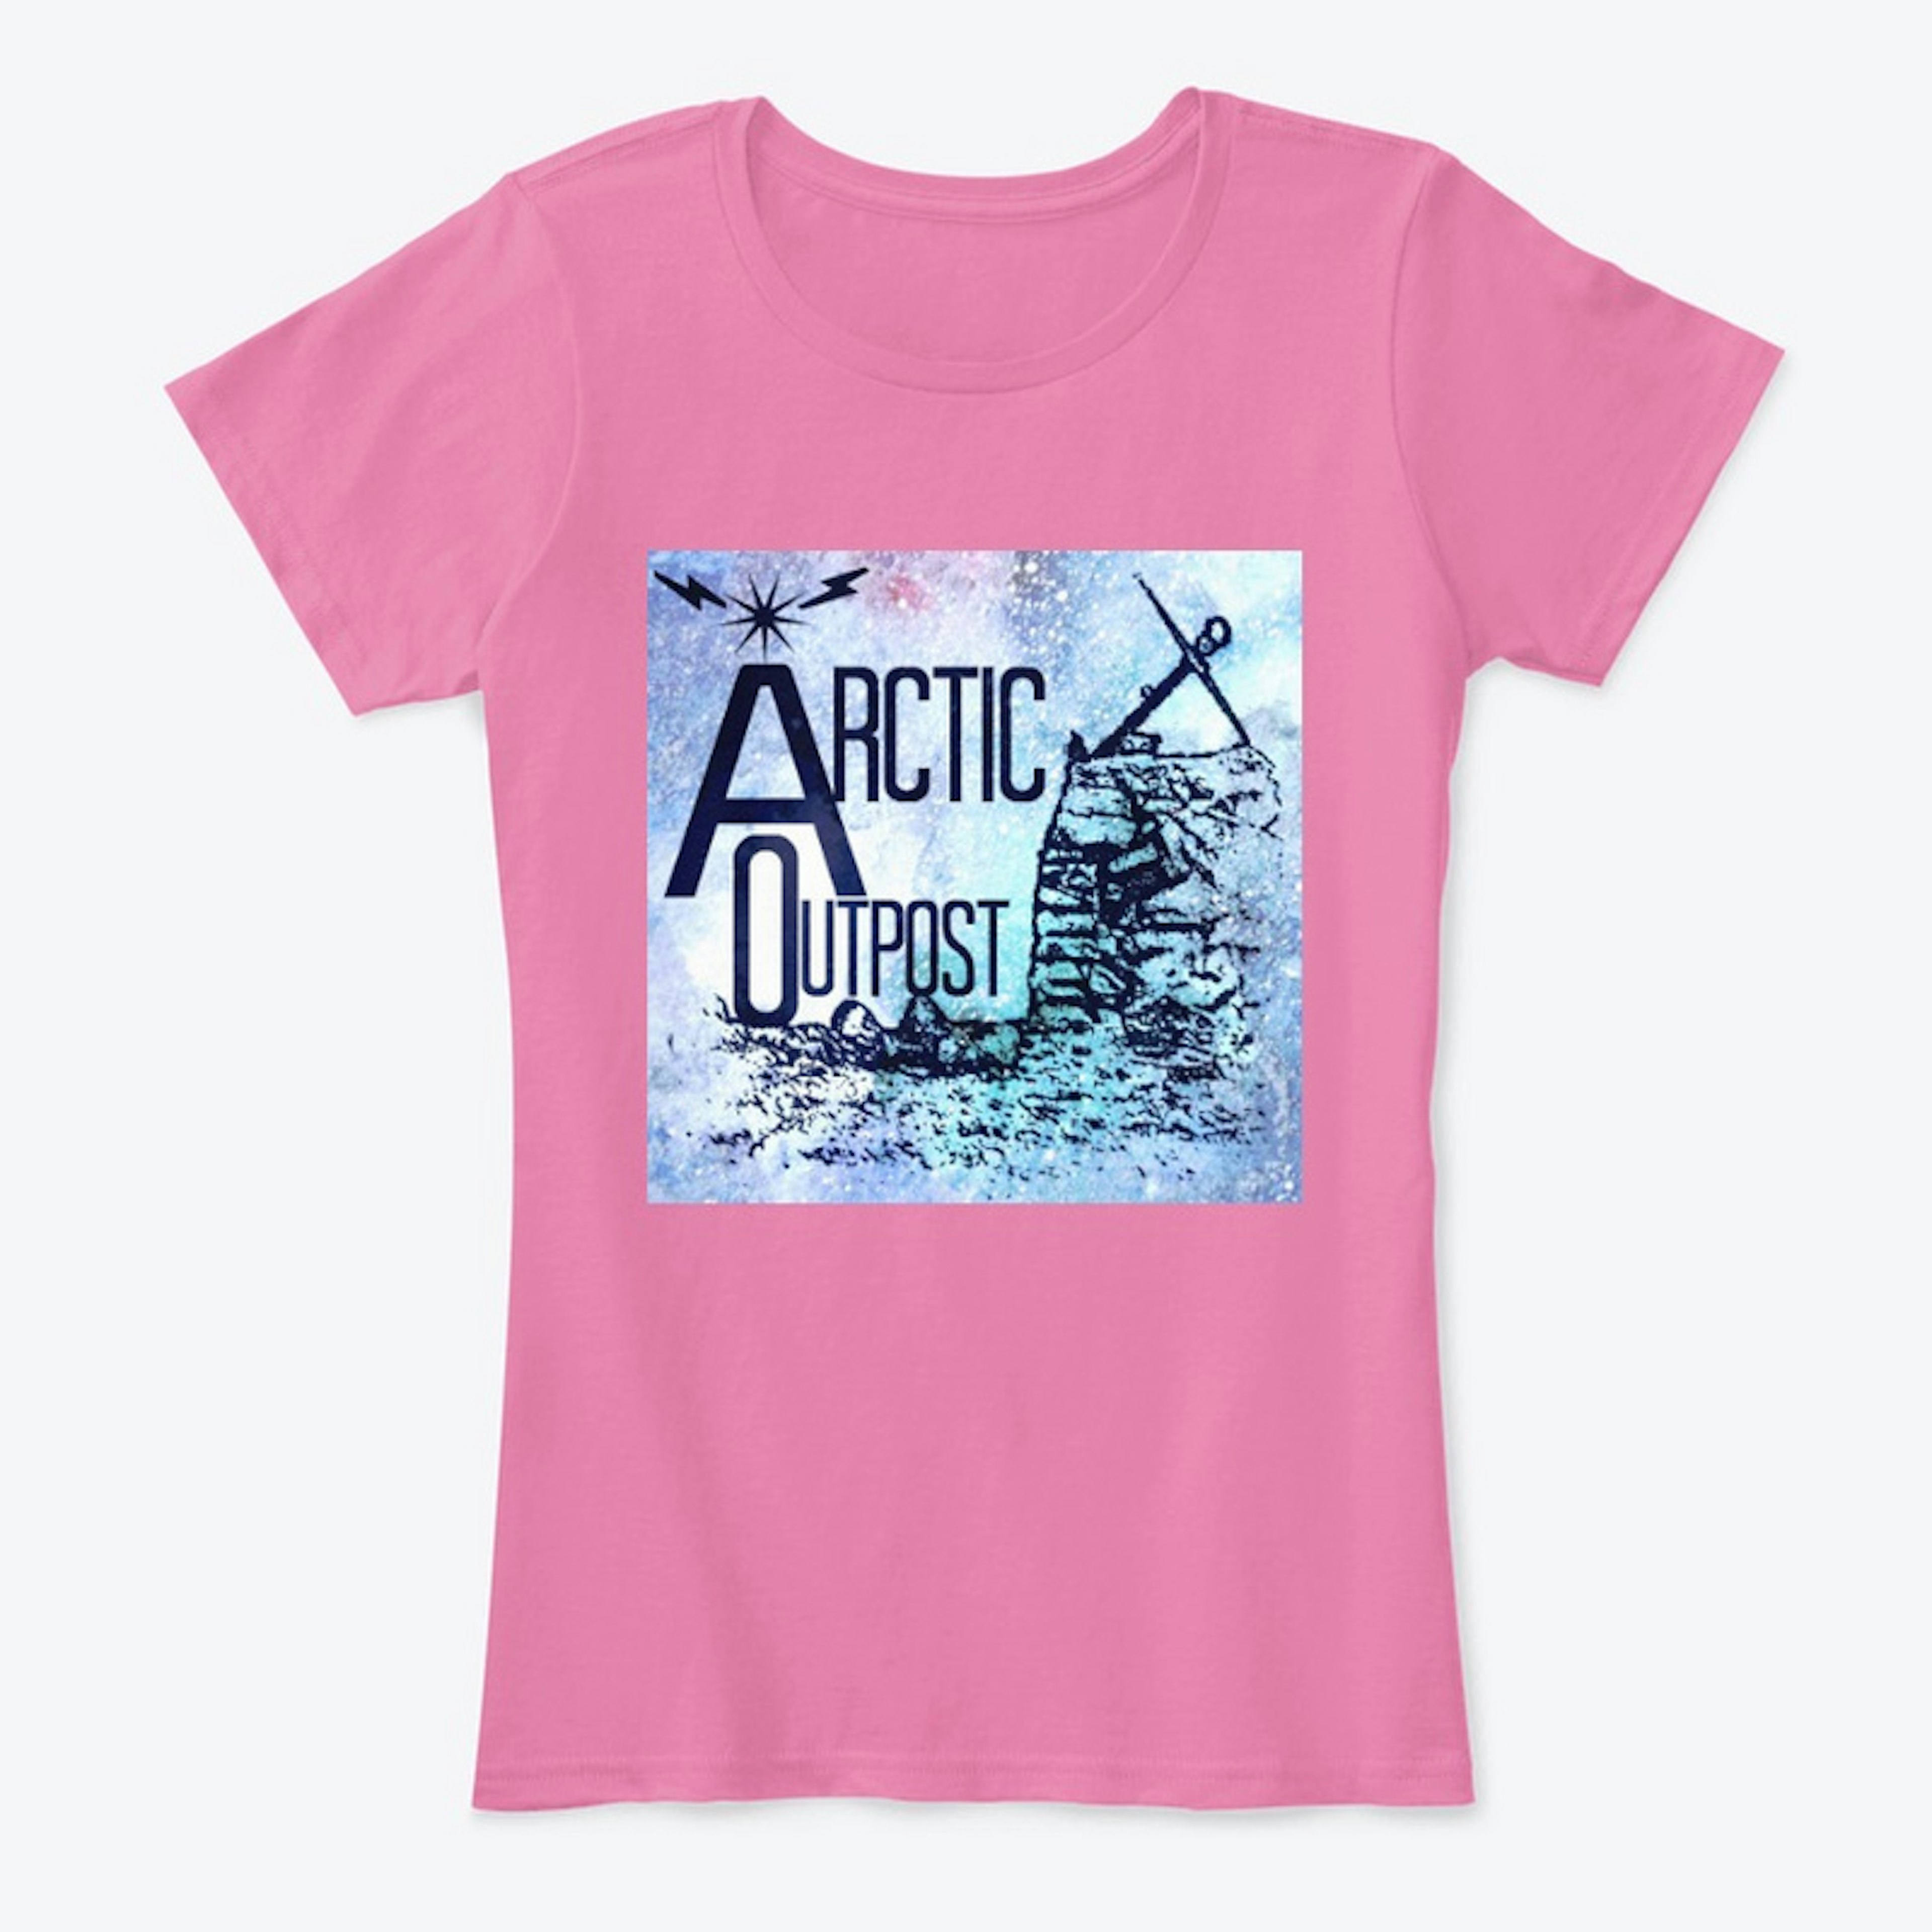 Arctic Outpost AM1270